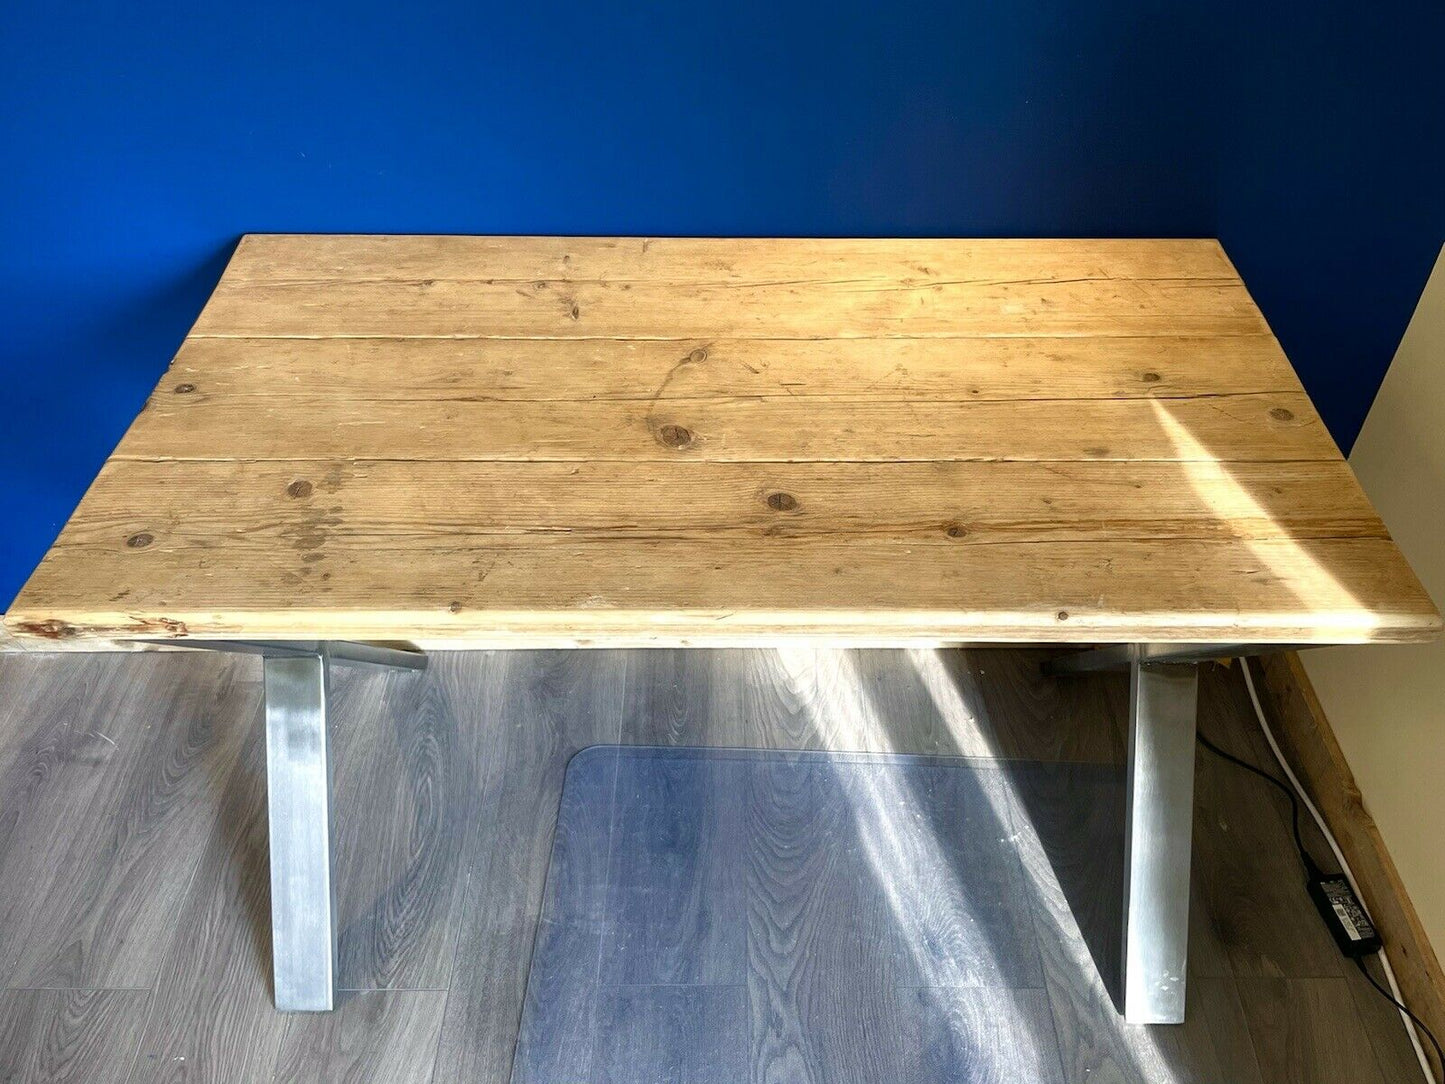 Rustic / Industrial, Handmade Plank Top Desk Upon Stainless Steel X Frame Legs